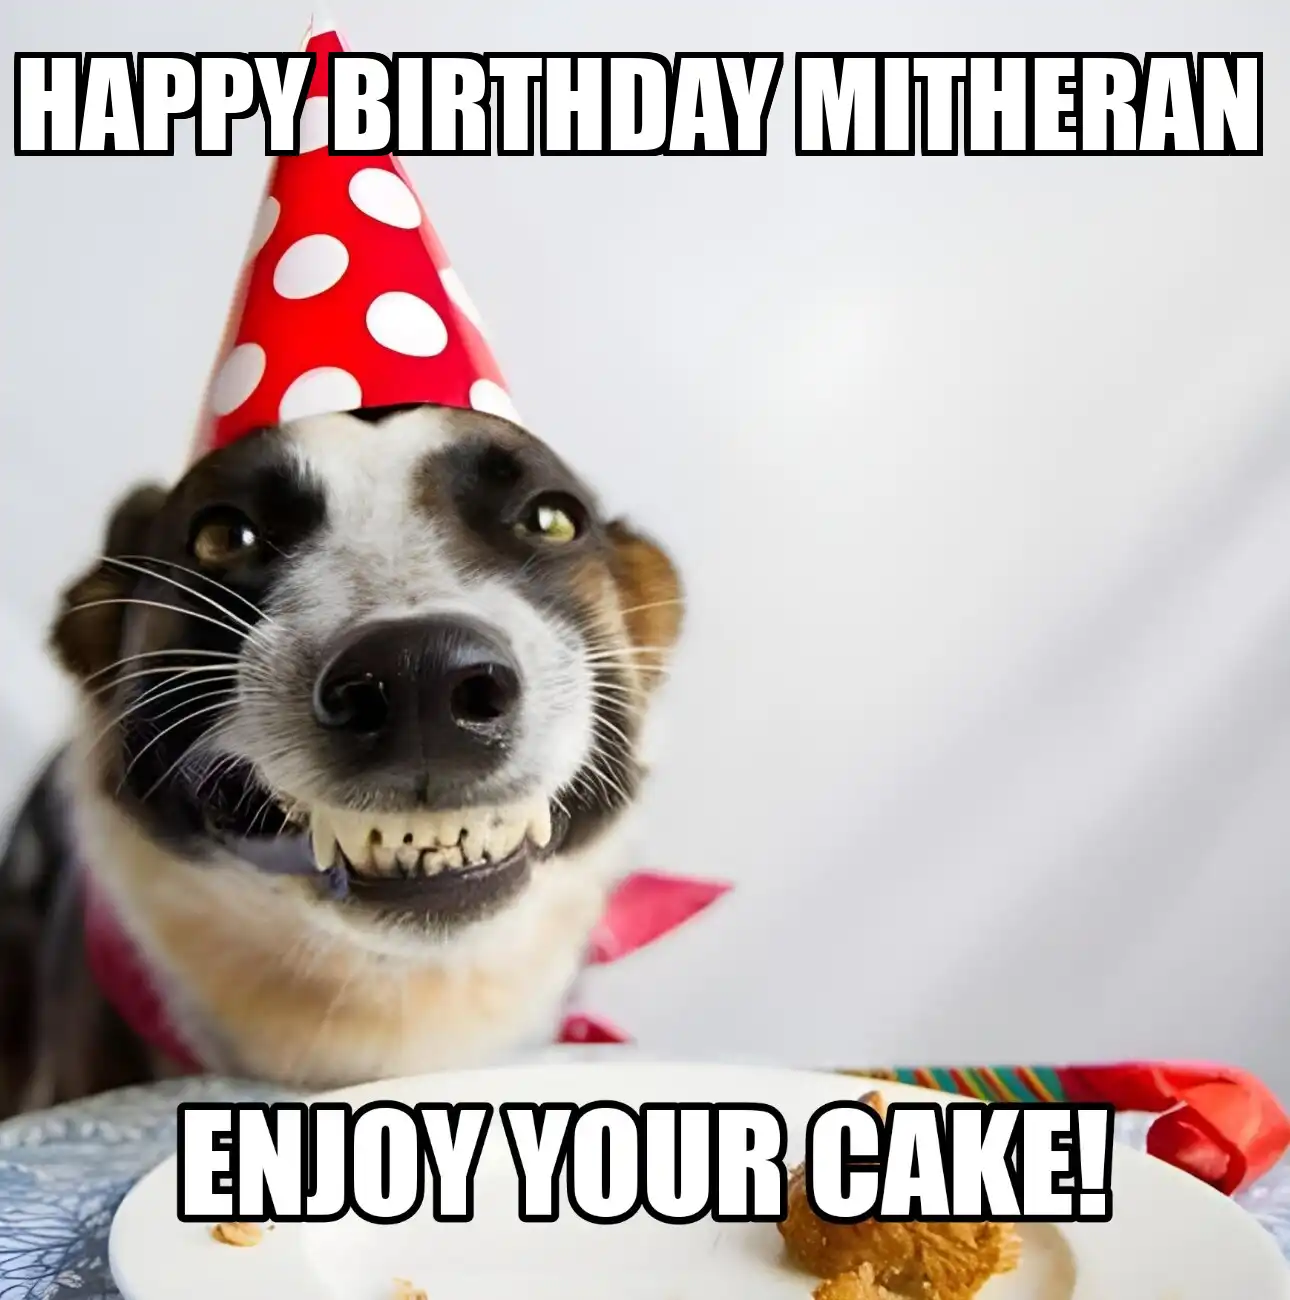 Happy Birthday Mitheran Enjoy Your Cake Dog Meme